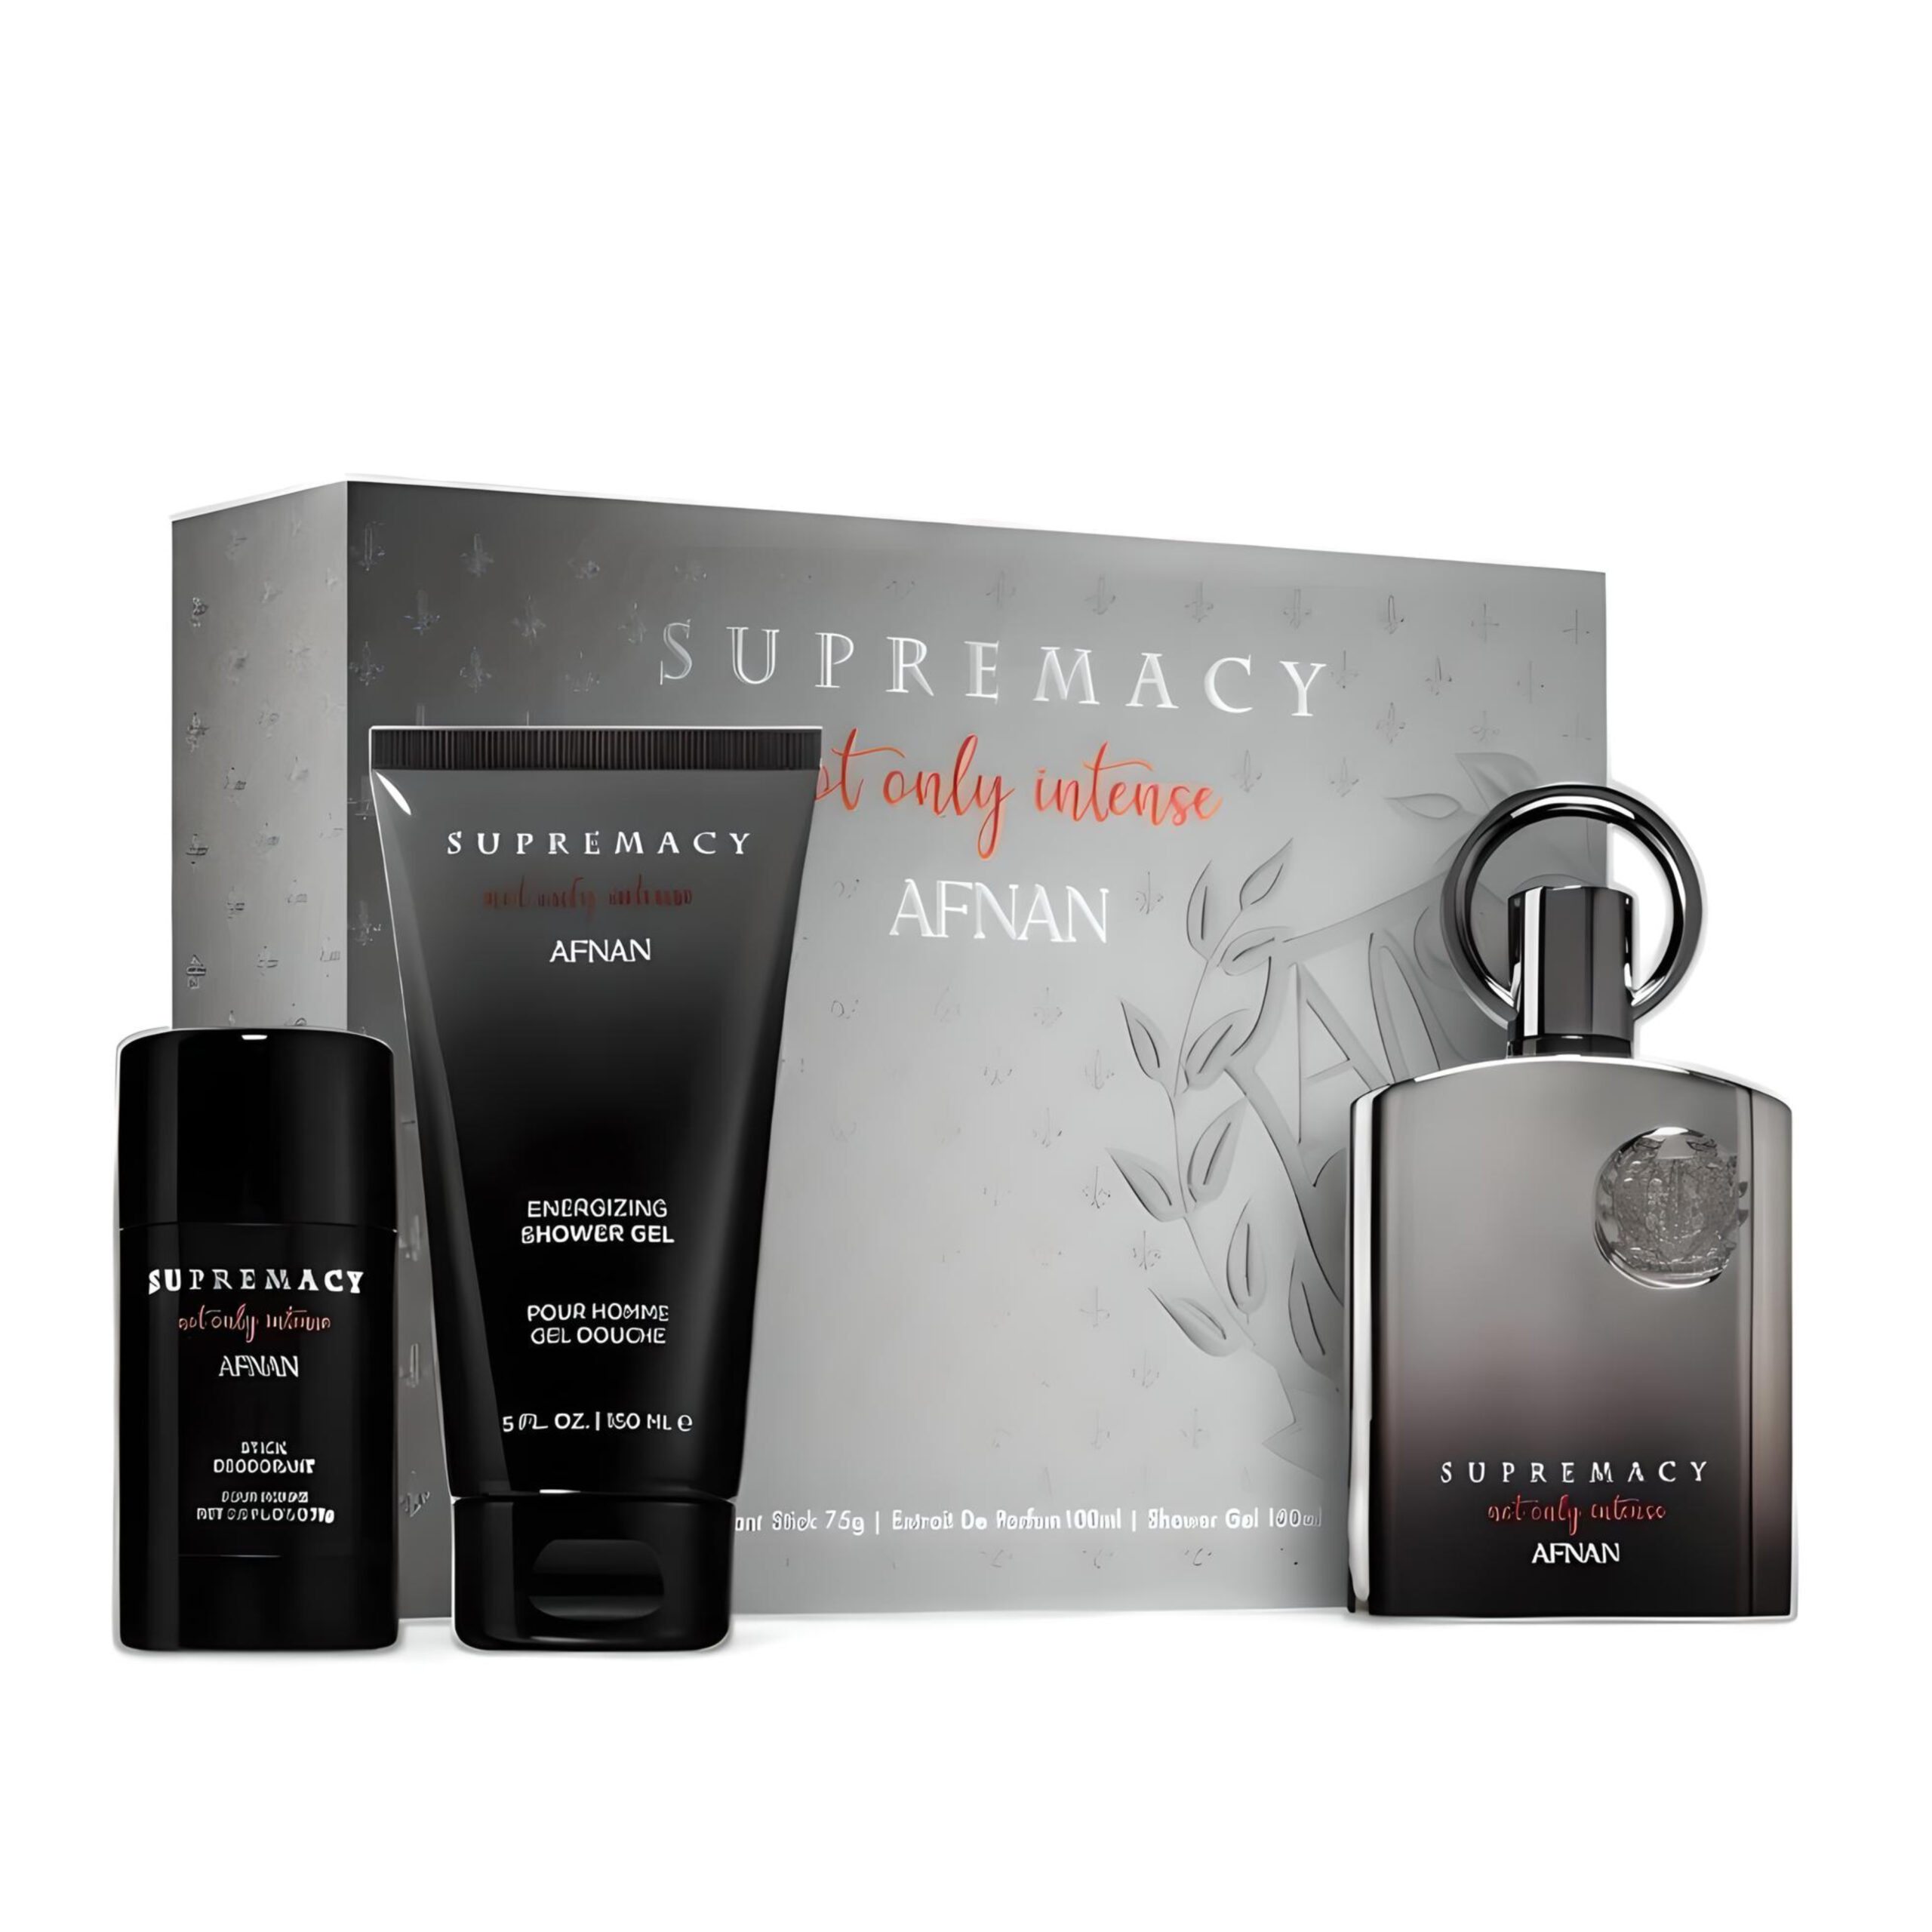 Supremacy Not Only Intense Perfume / Extrait De Parfum 100Ml By Afnan